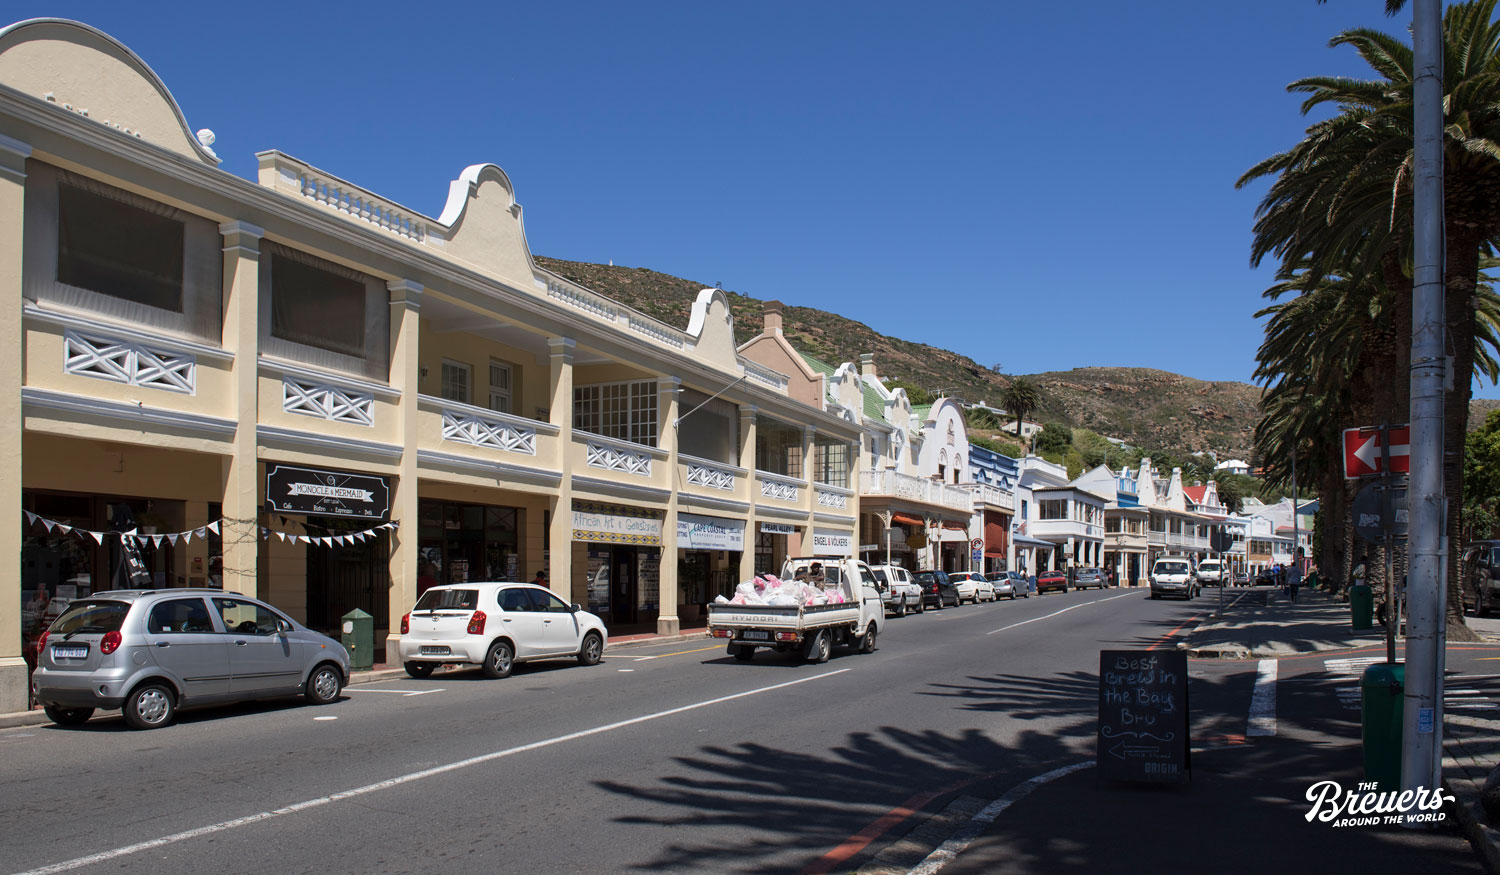 Das viktorianische Städtchen Simon's Town bei Kapstadt